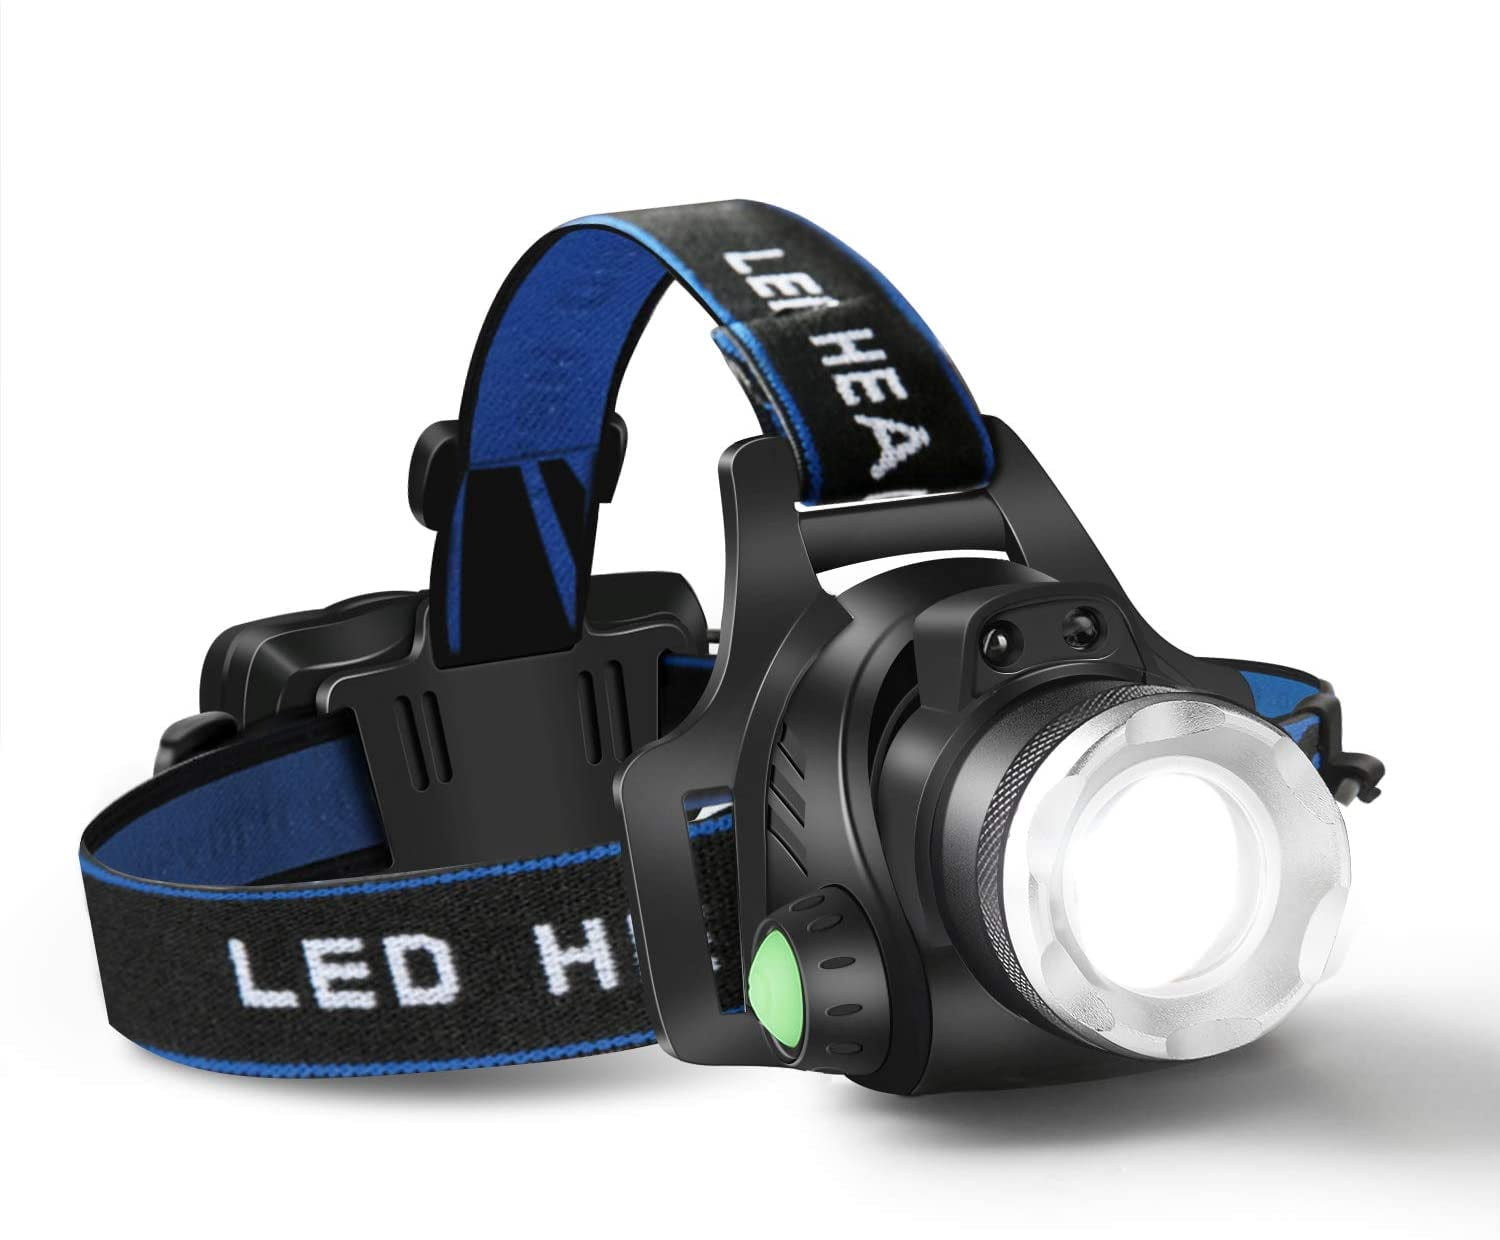 Waterproof Hilking Super Bright COB 1 LED Headlamp 2 Mode Head Light Lamp Flash 